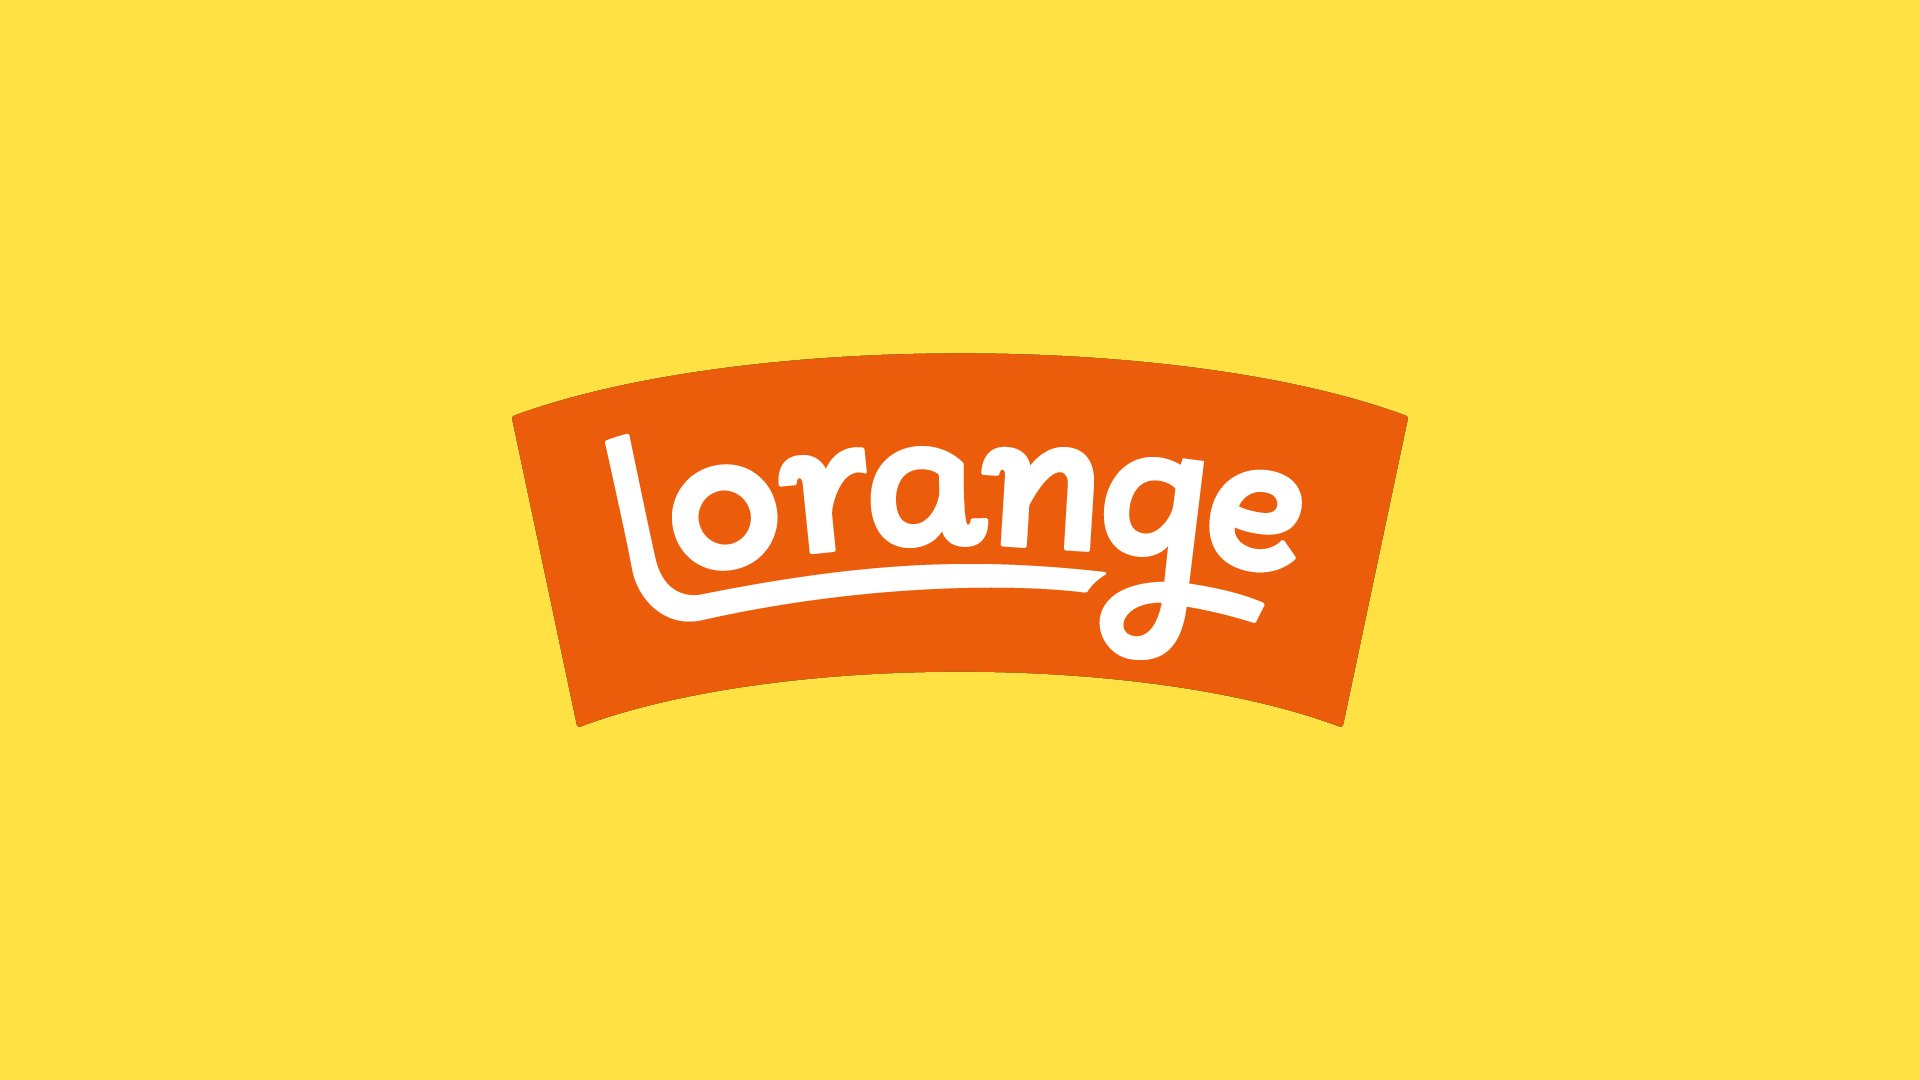 Lorange Branding and Packaging - Ave Design